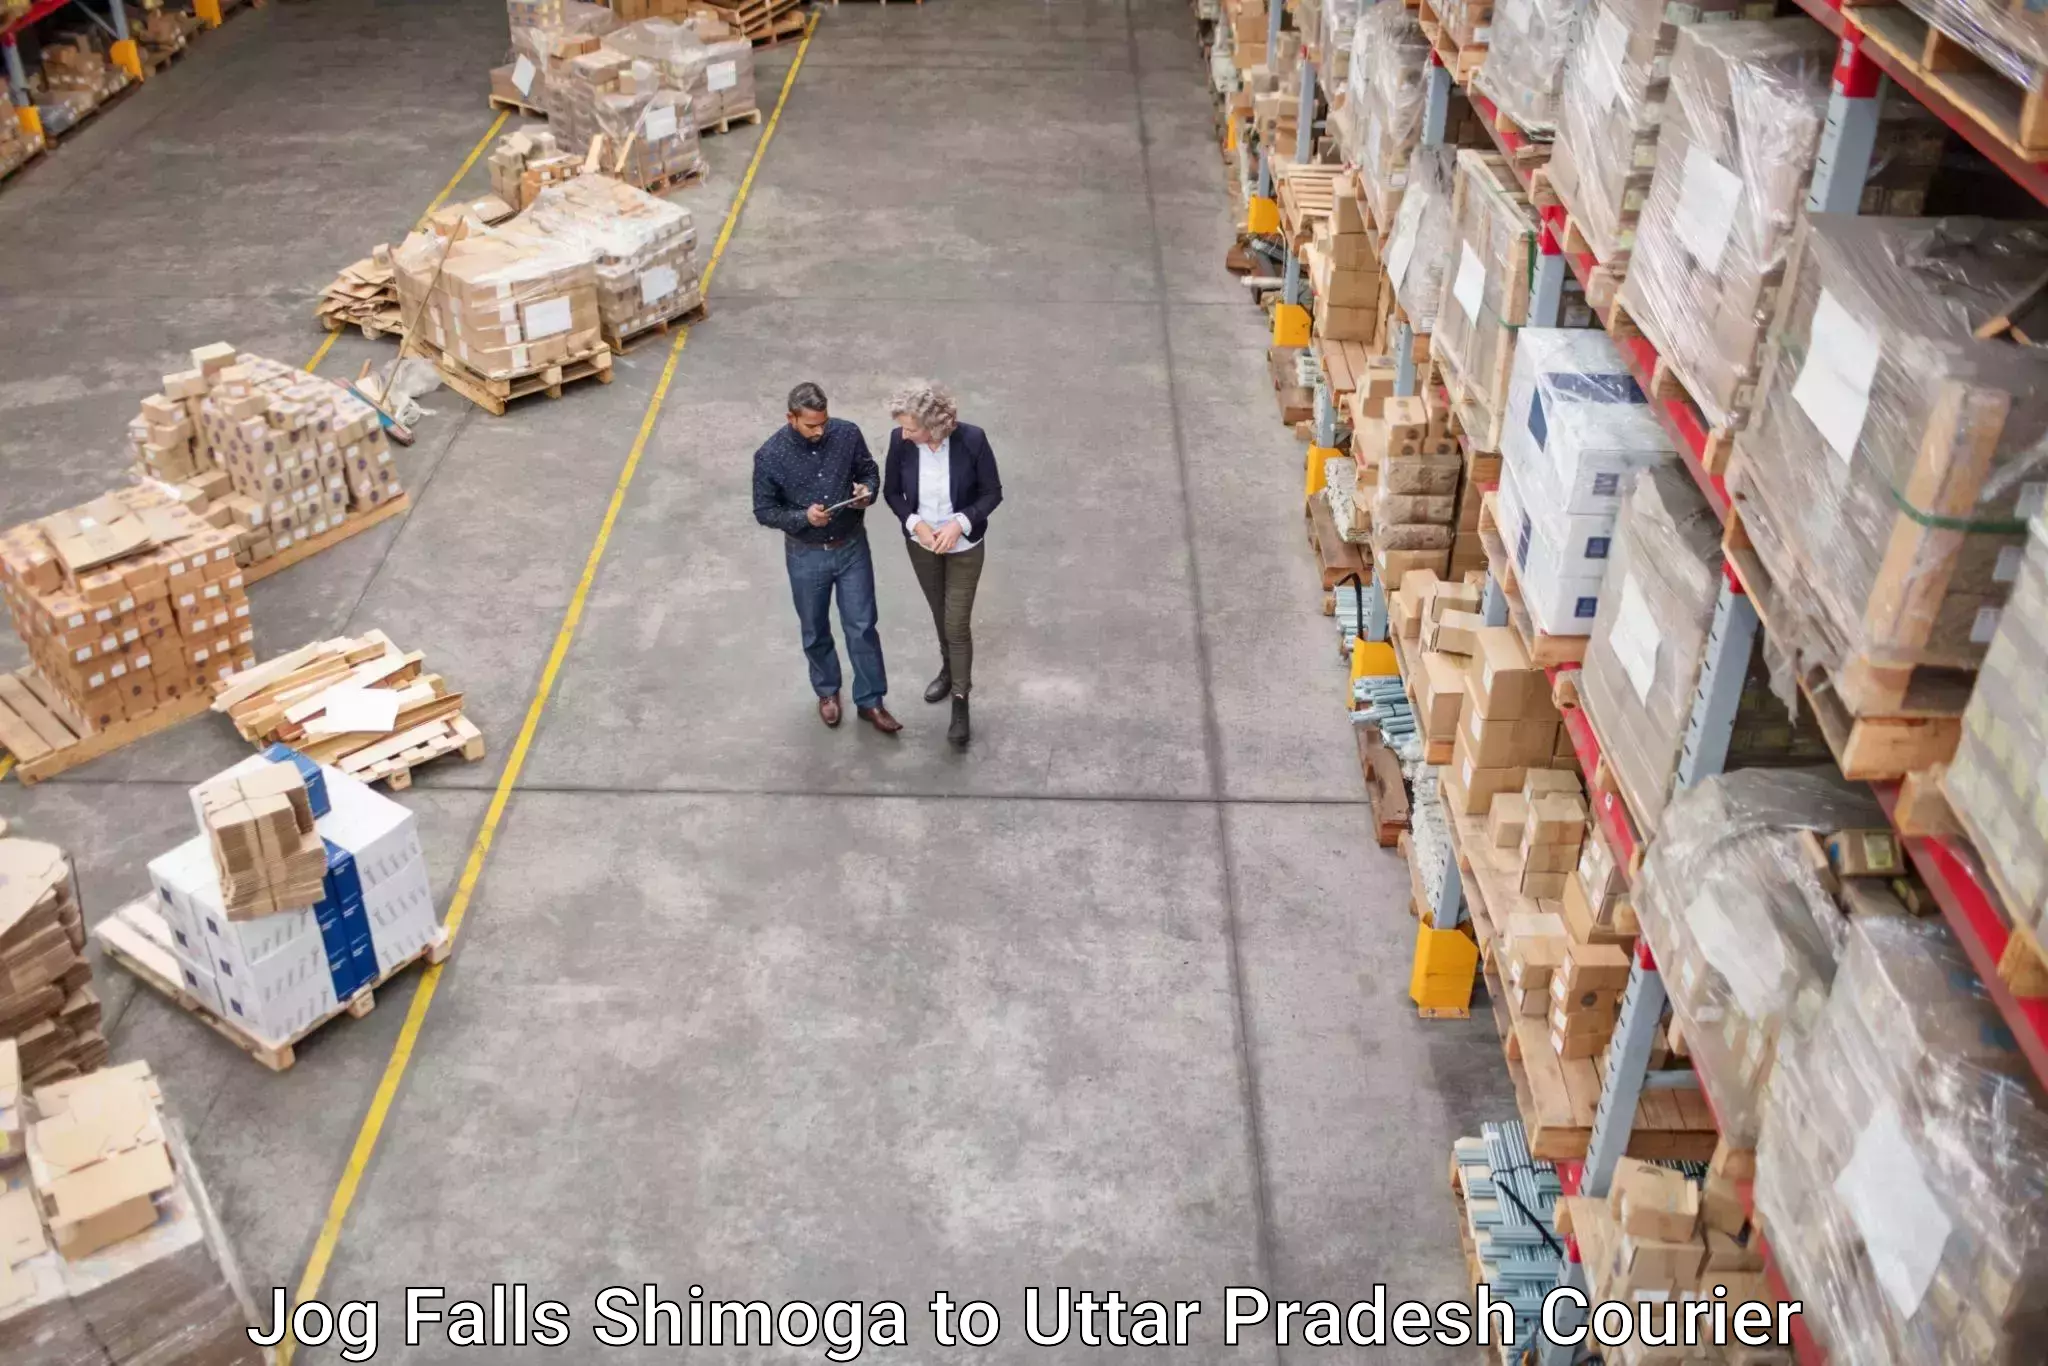 Cargo delivery service Jog Falls Shimoga to Bareilly